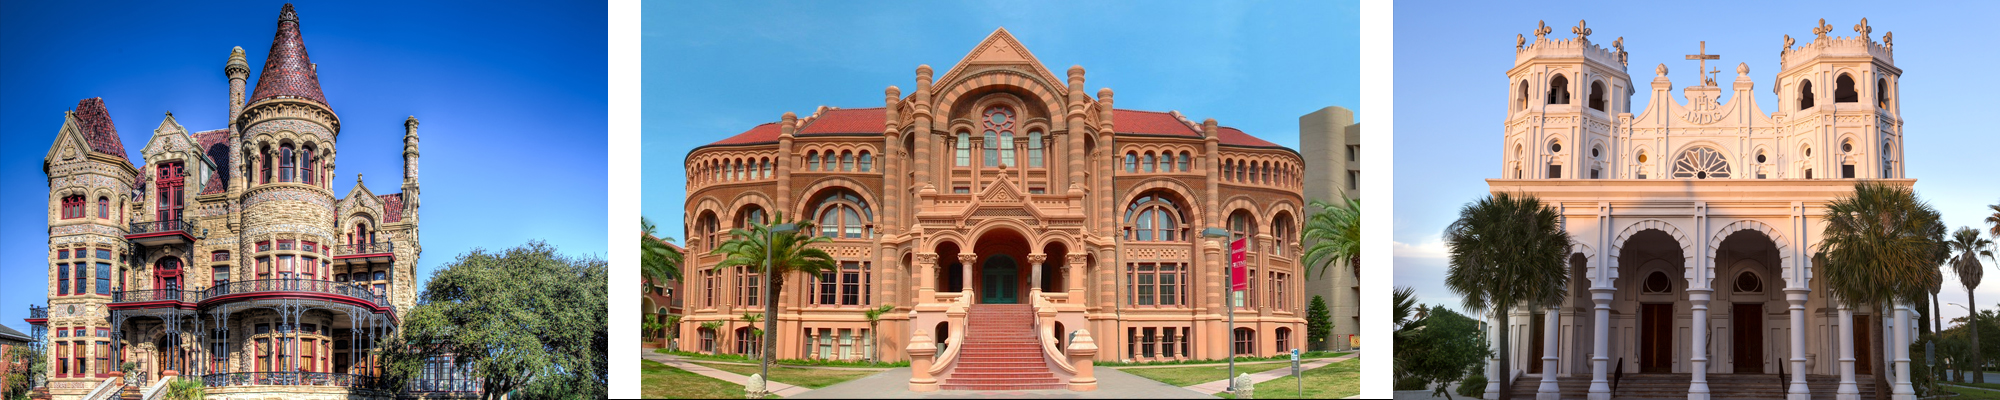 Galveston historical buildings